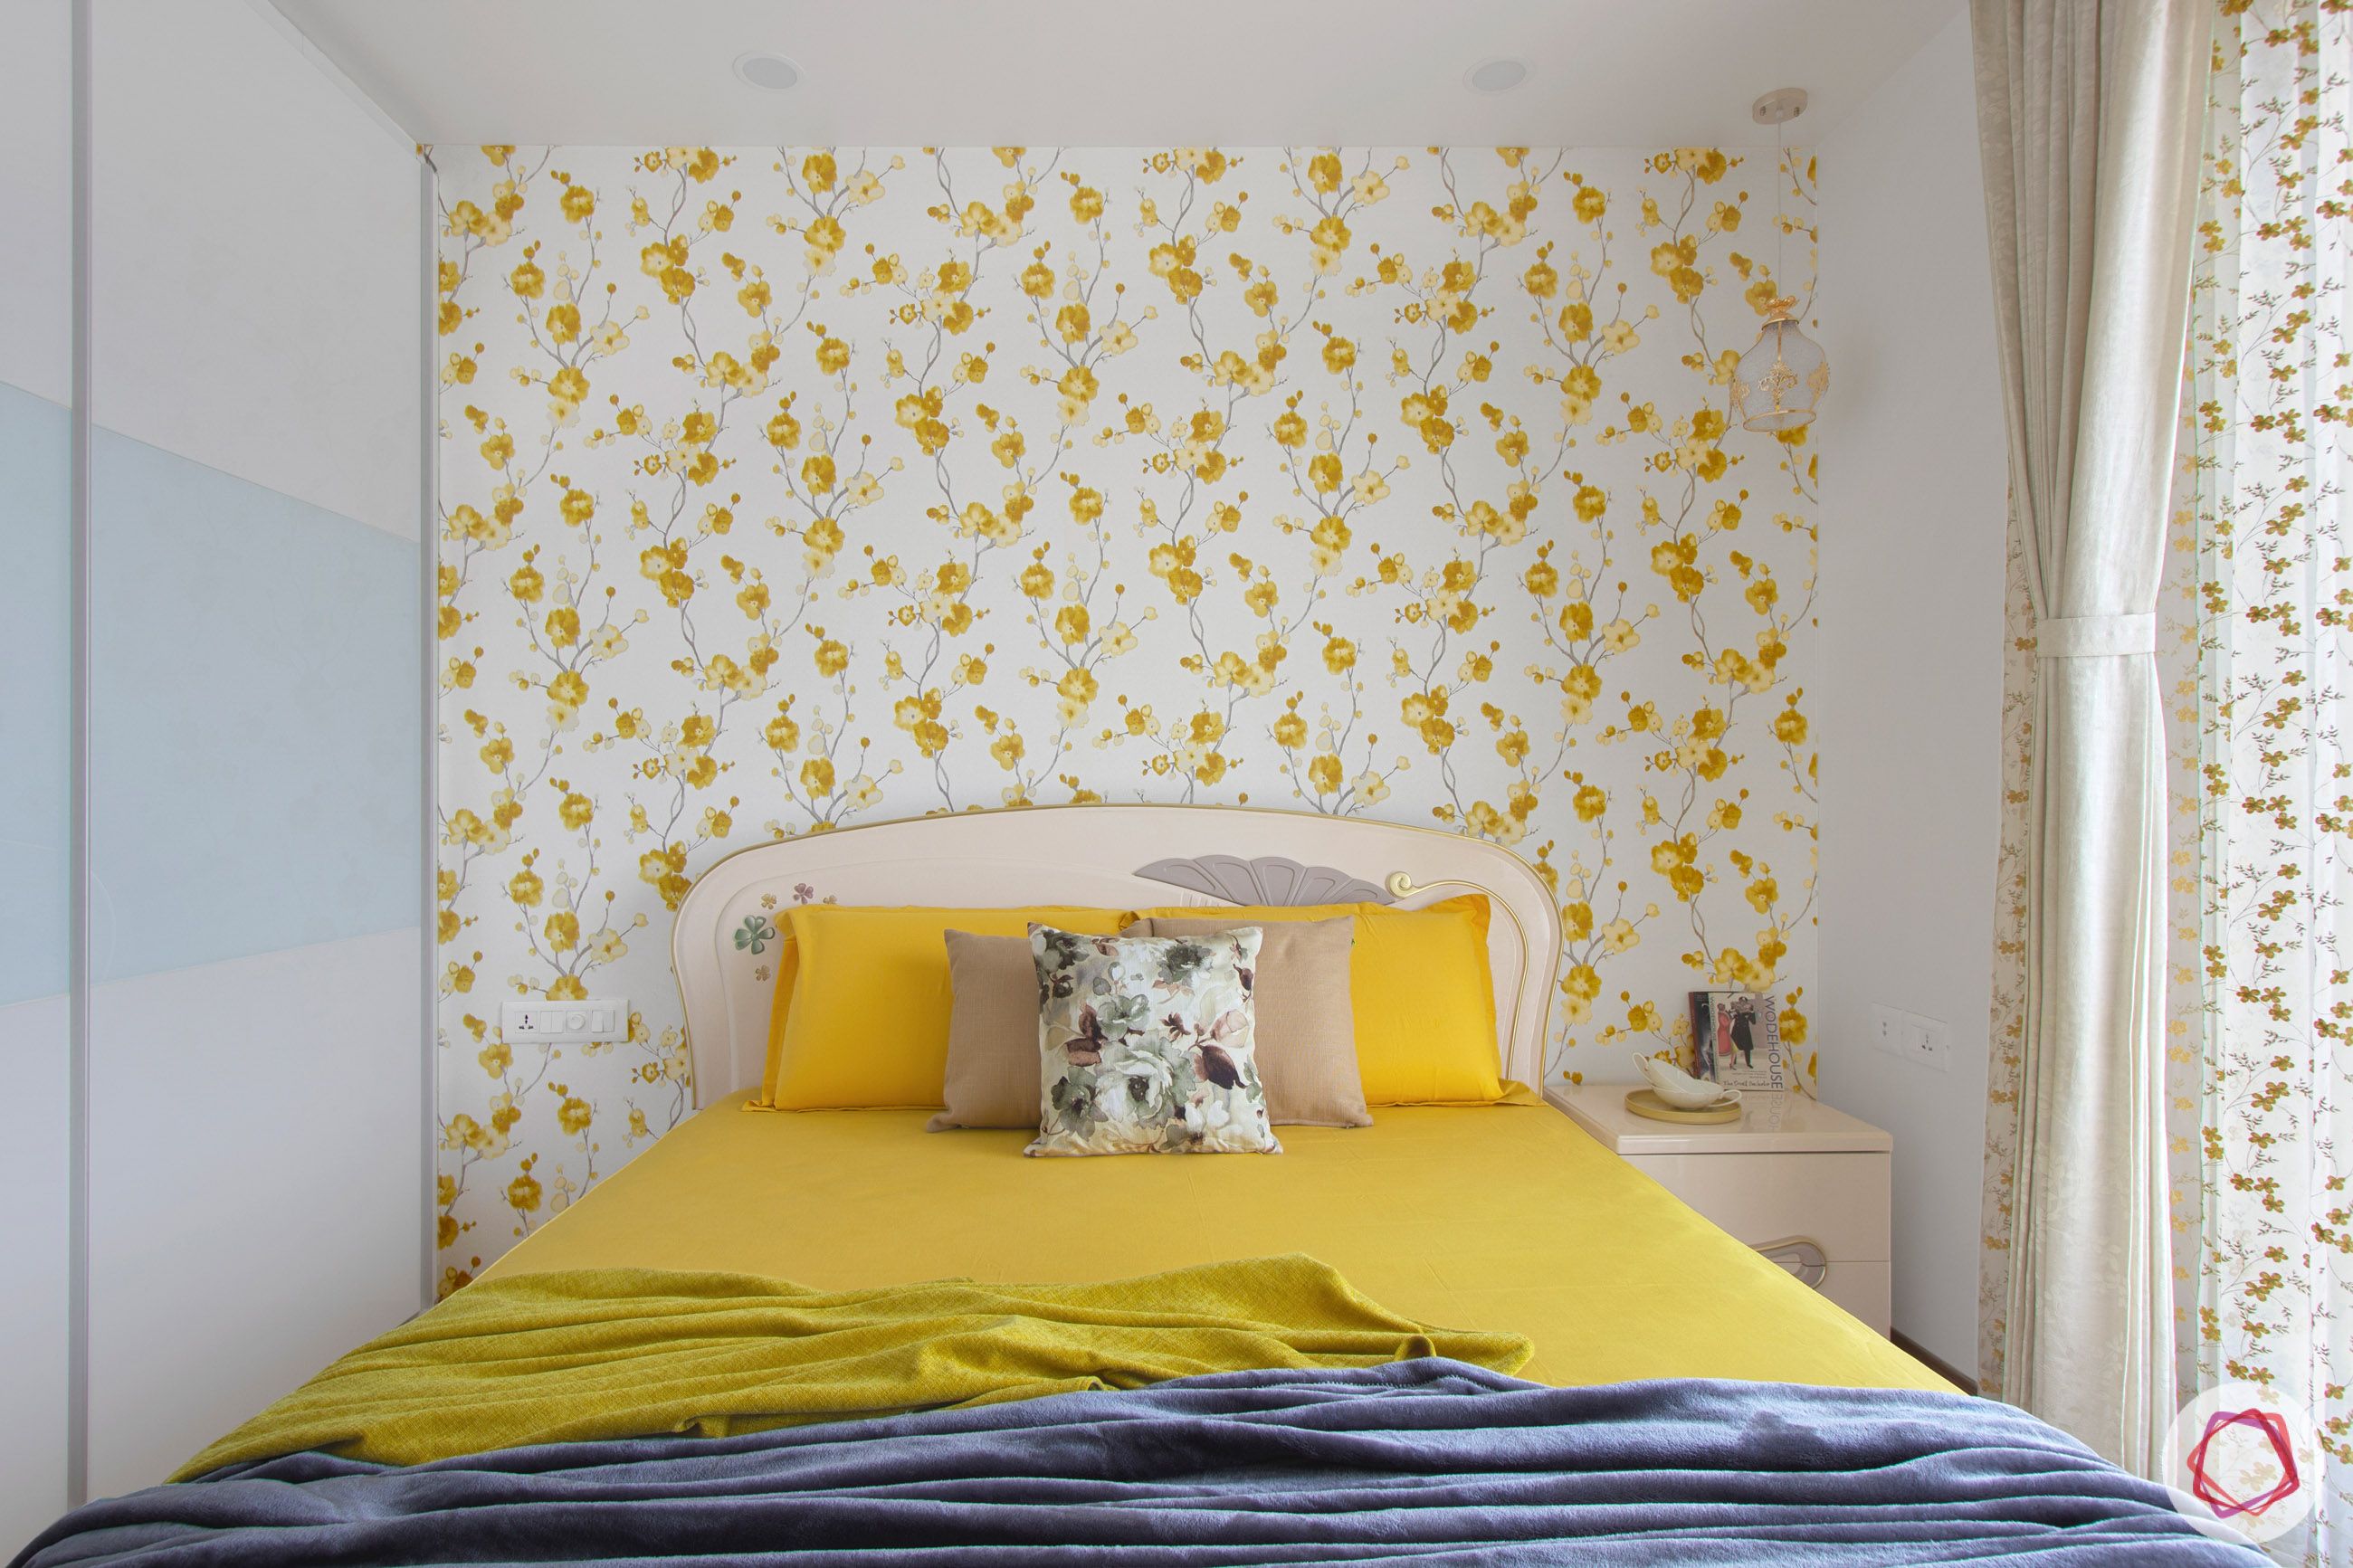 snn-raj-grandeur-master bedroom-yellow theme